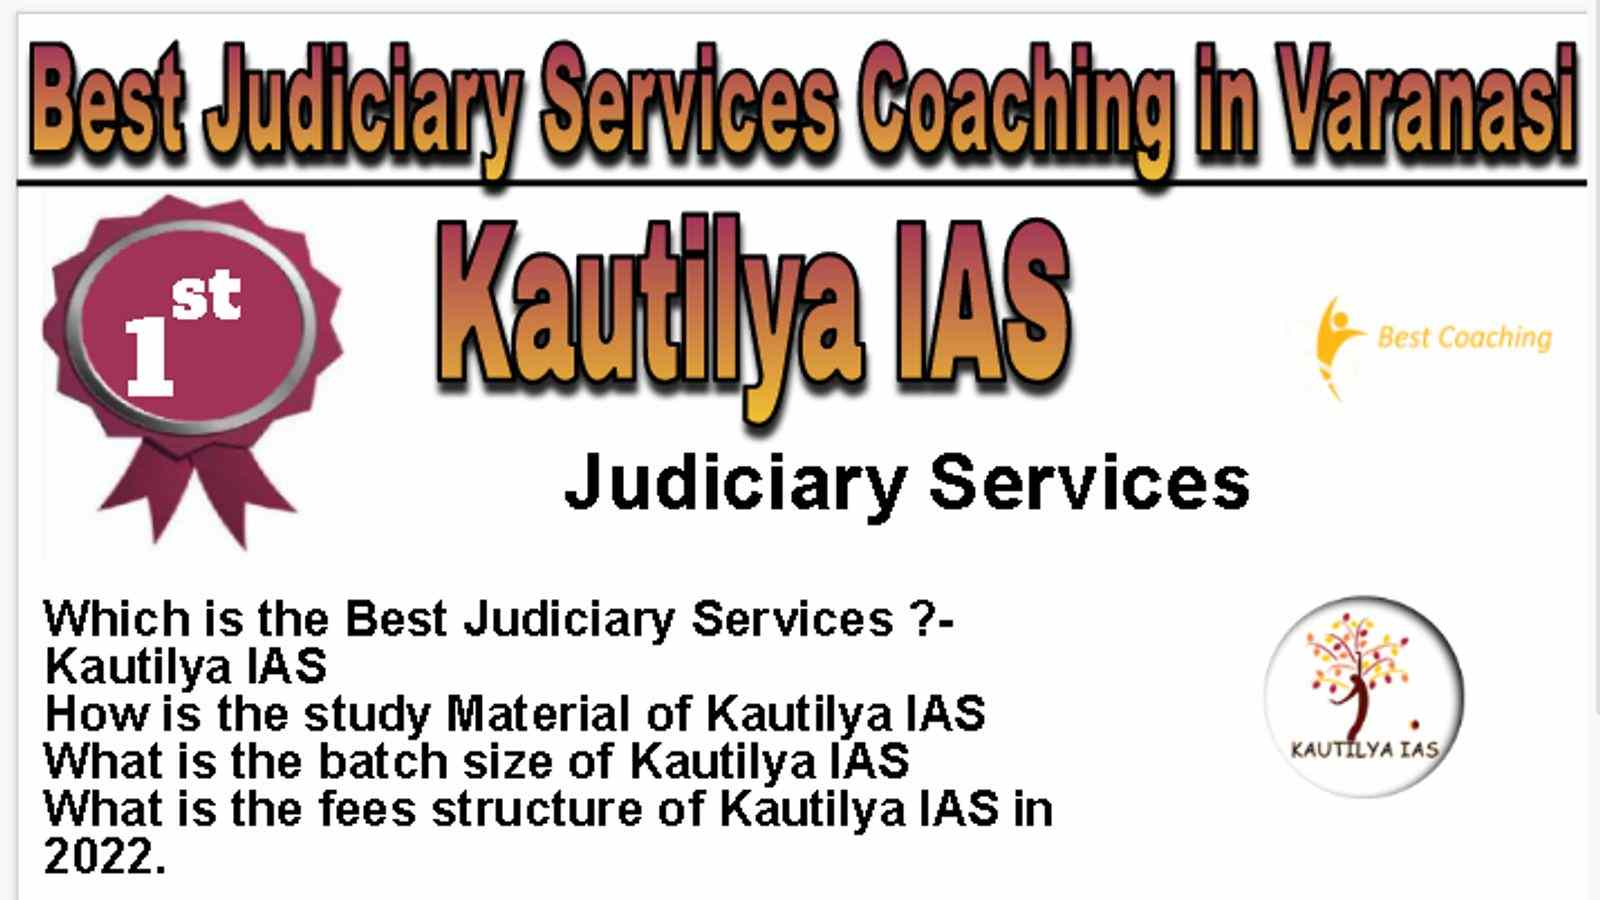 Rank 1 Best Judiciary Services Coaching in Varanasi